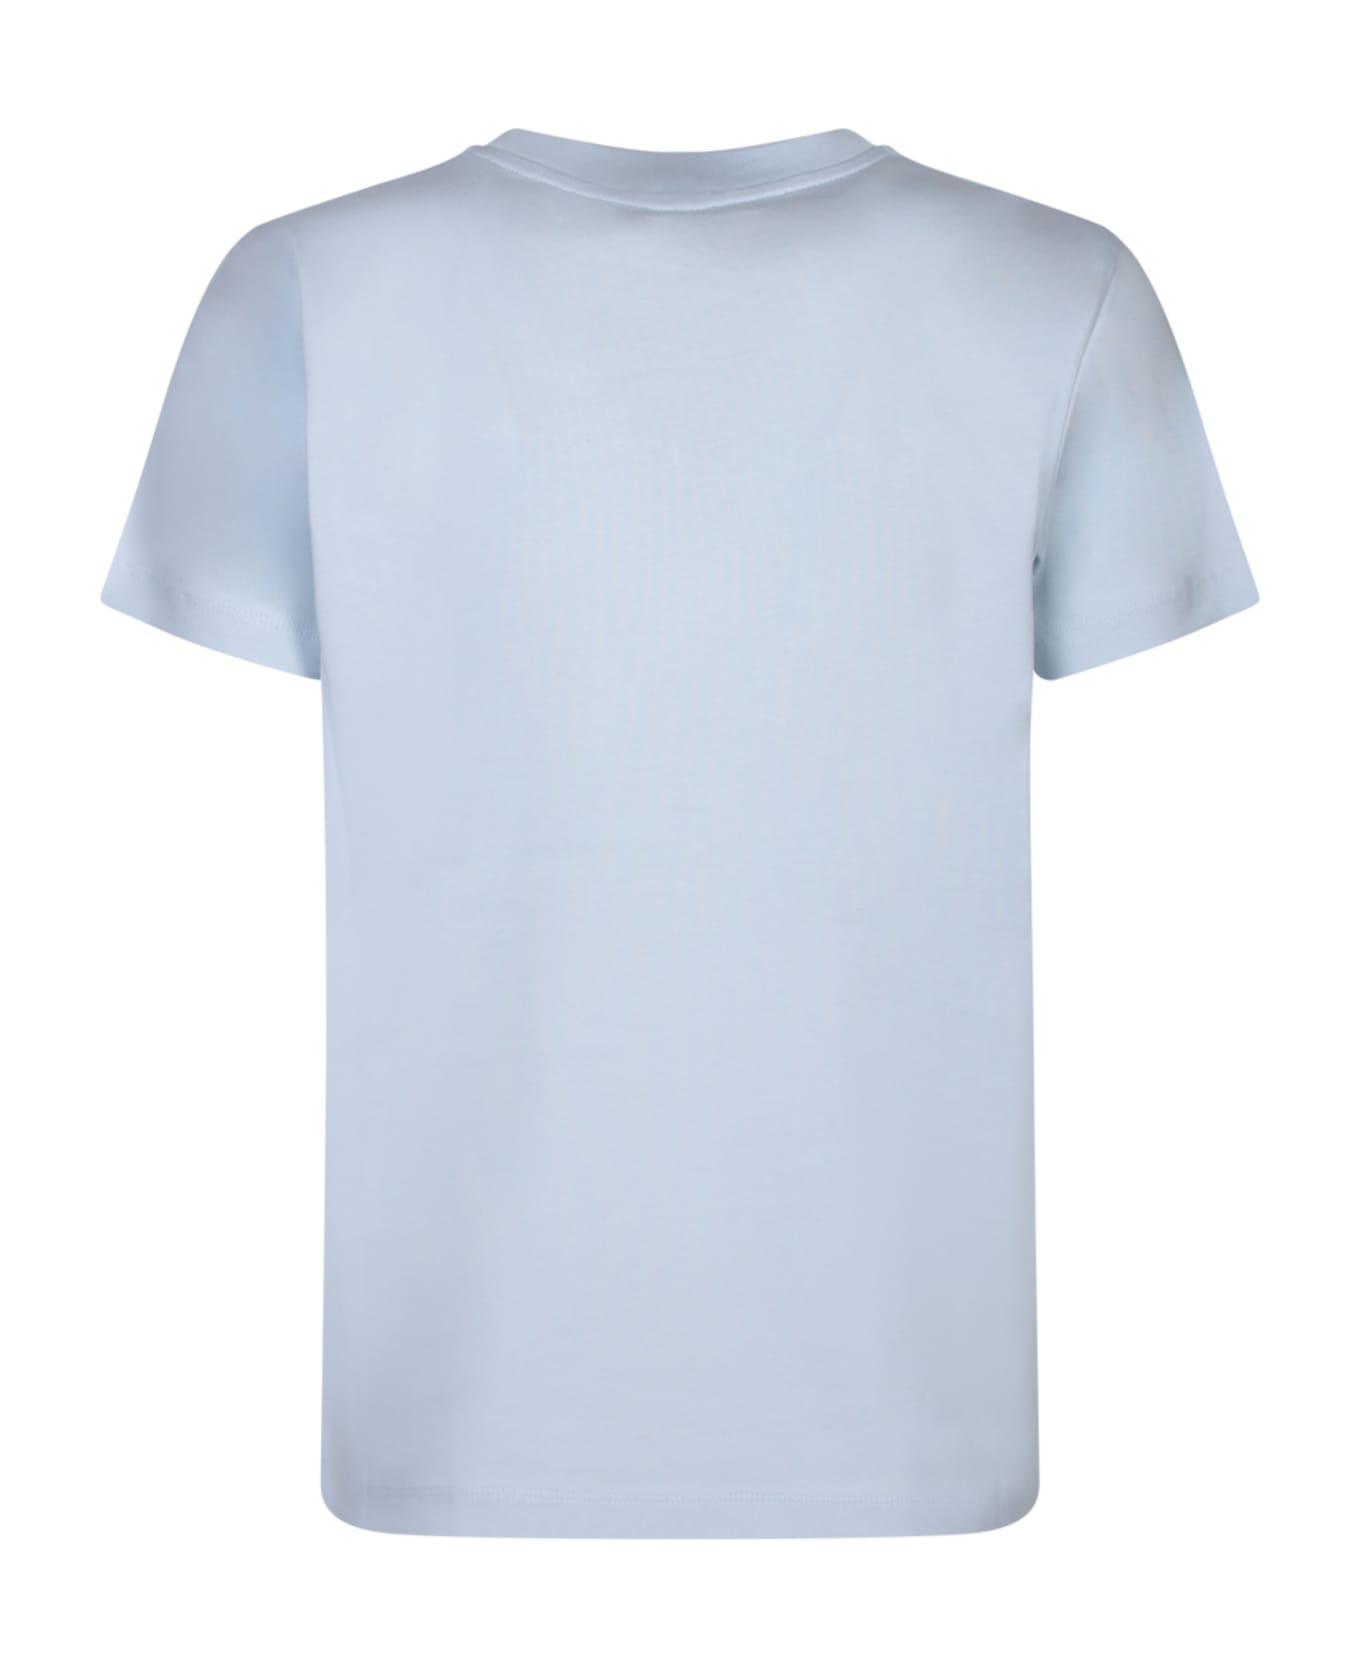 Moncler T-shirt With Logo - Blue